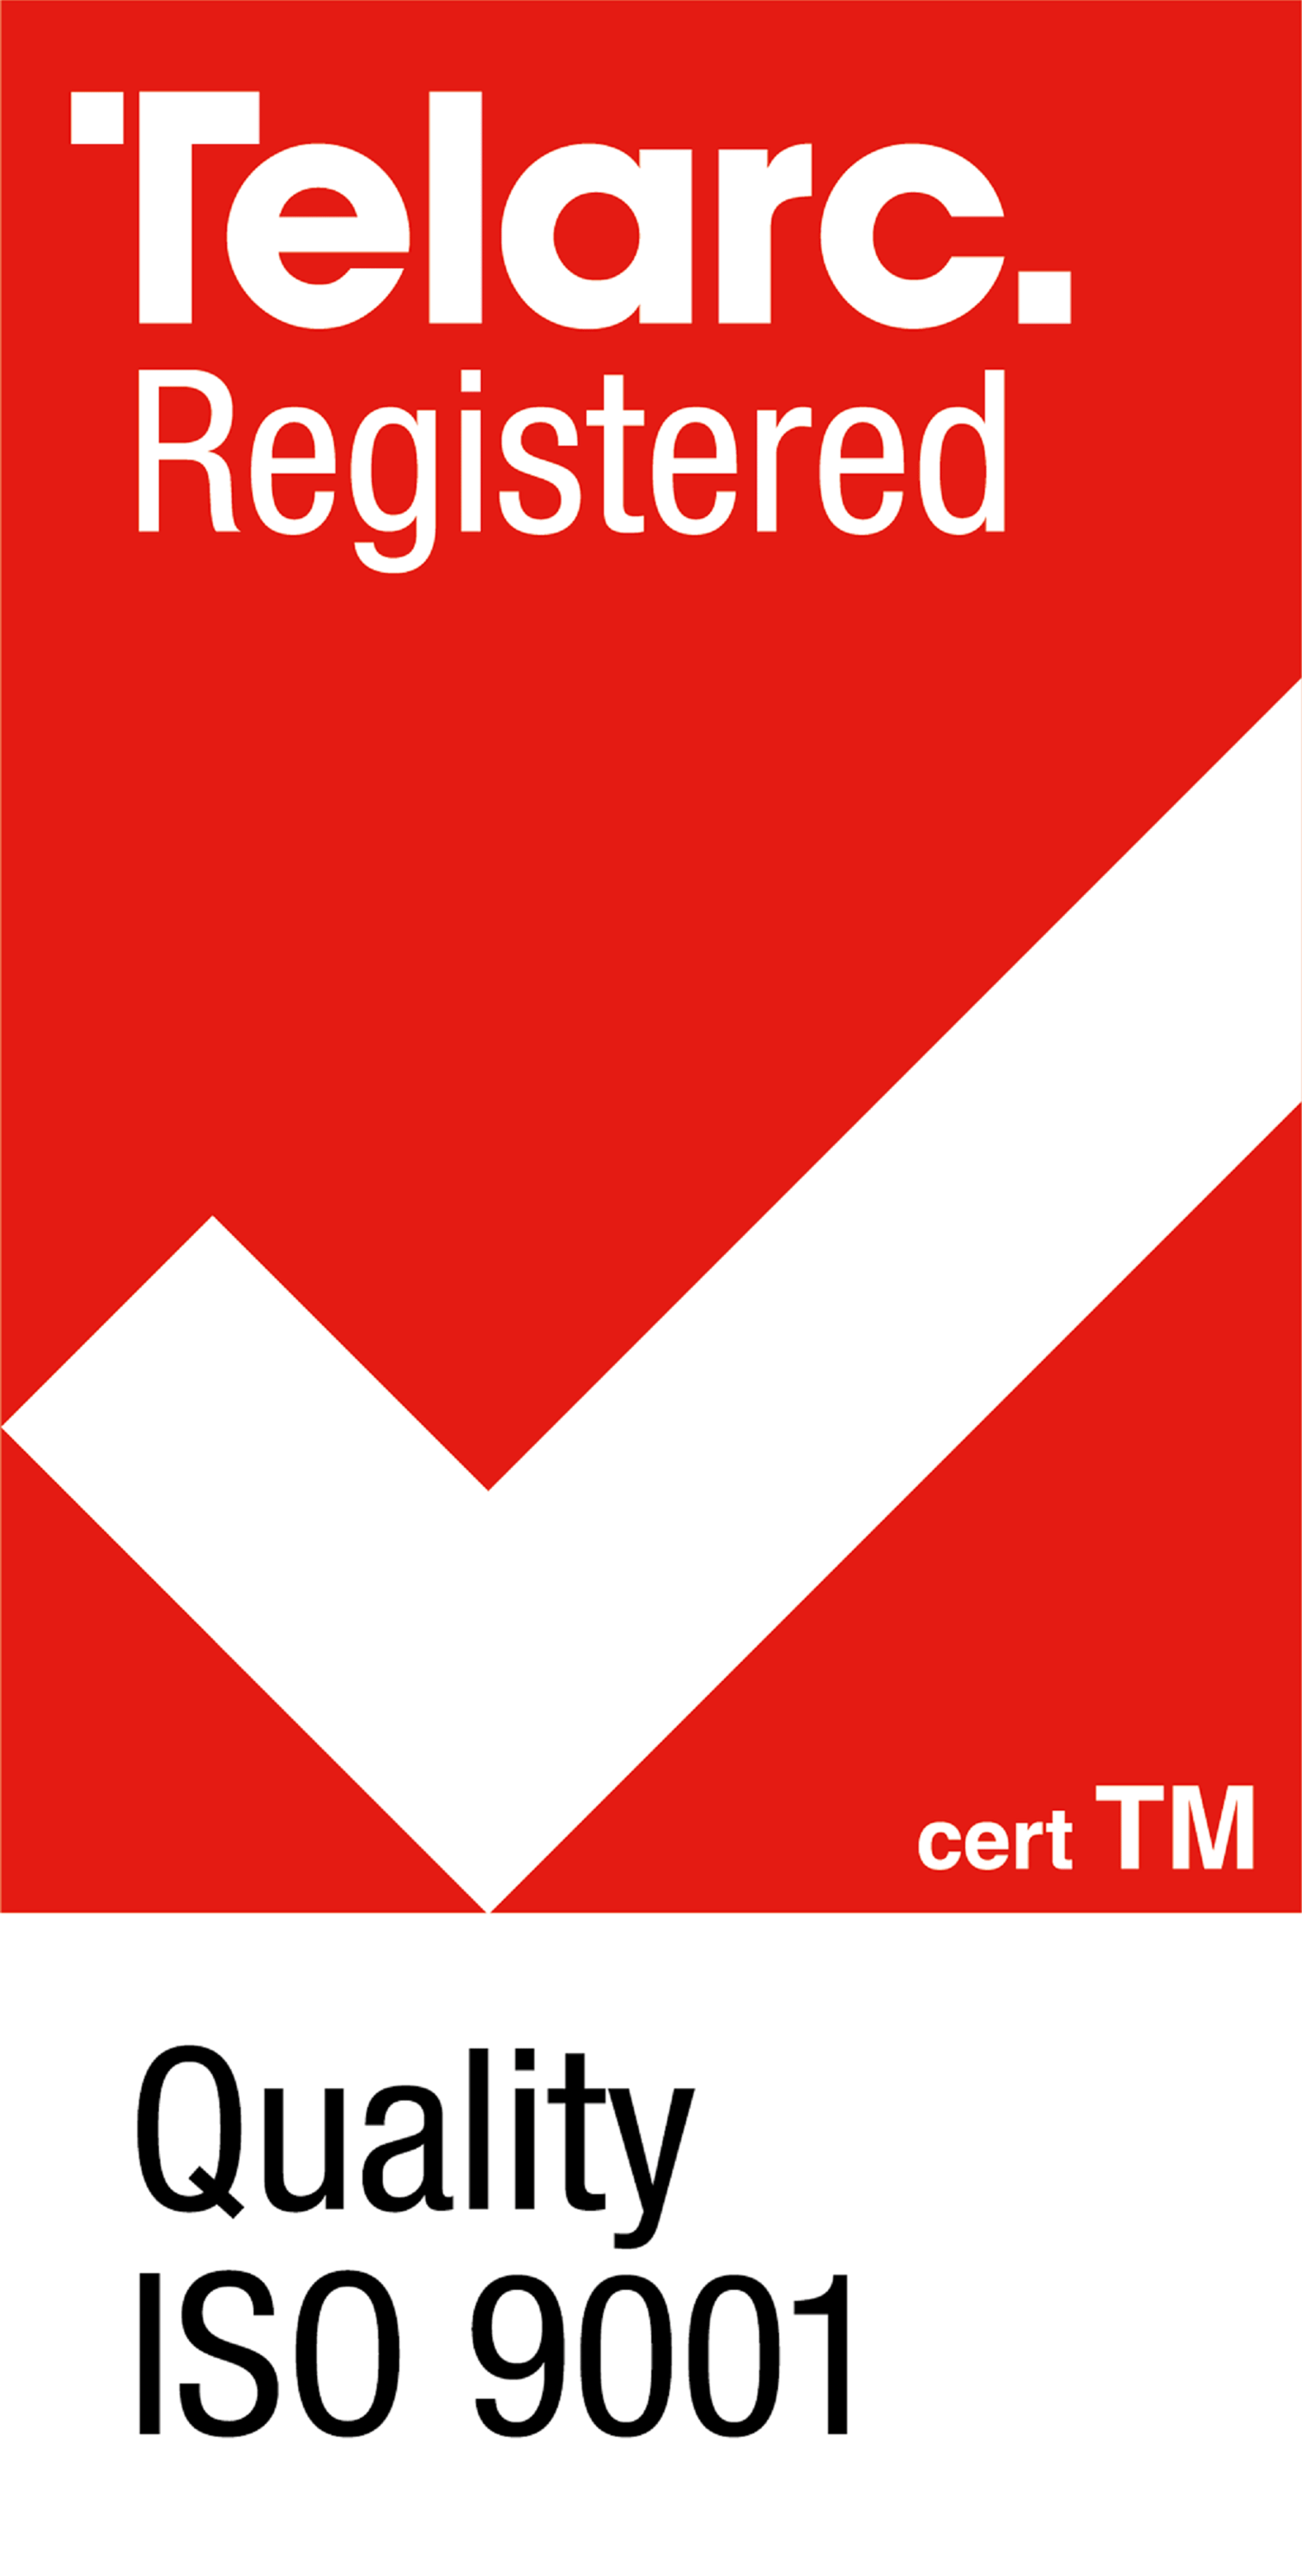 TEL7180-Reg-Red-9001-01 (1) resized